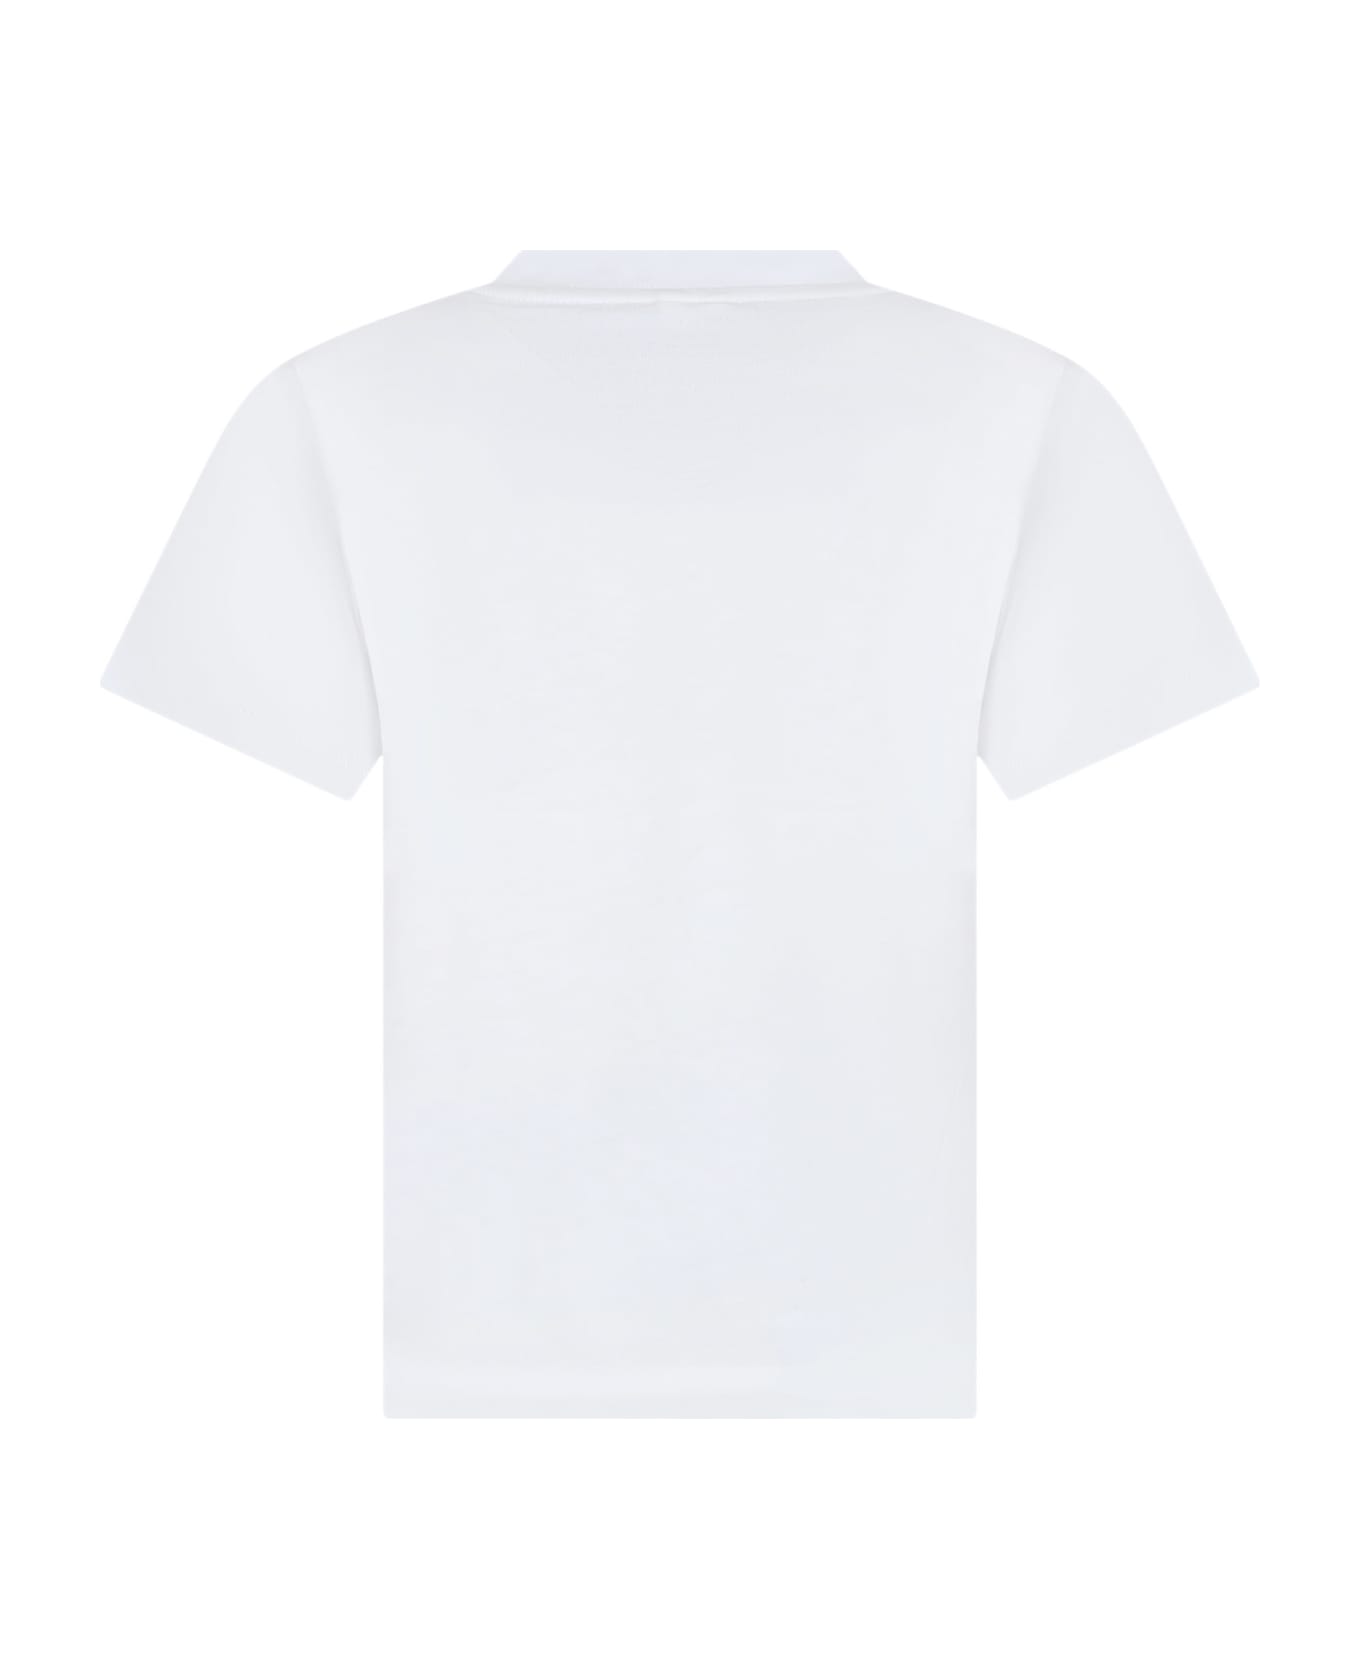 Stella McCartney Kids White T-shirt For Girl With Multicolor Sun Print - White